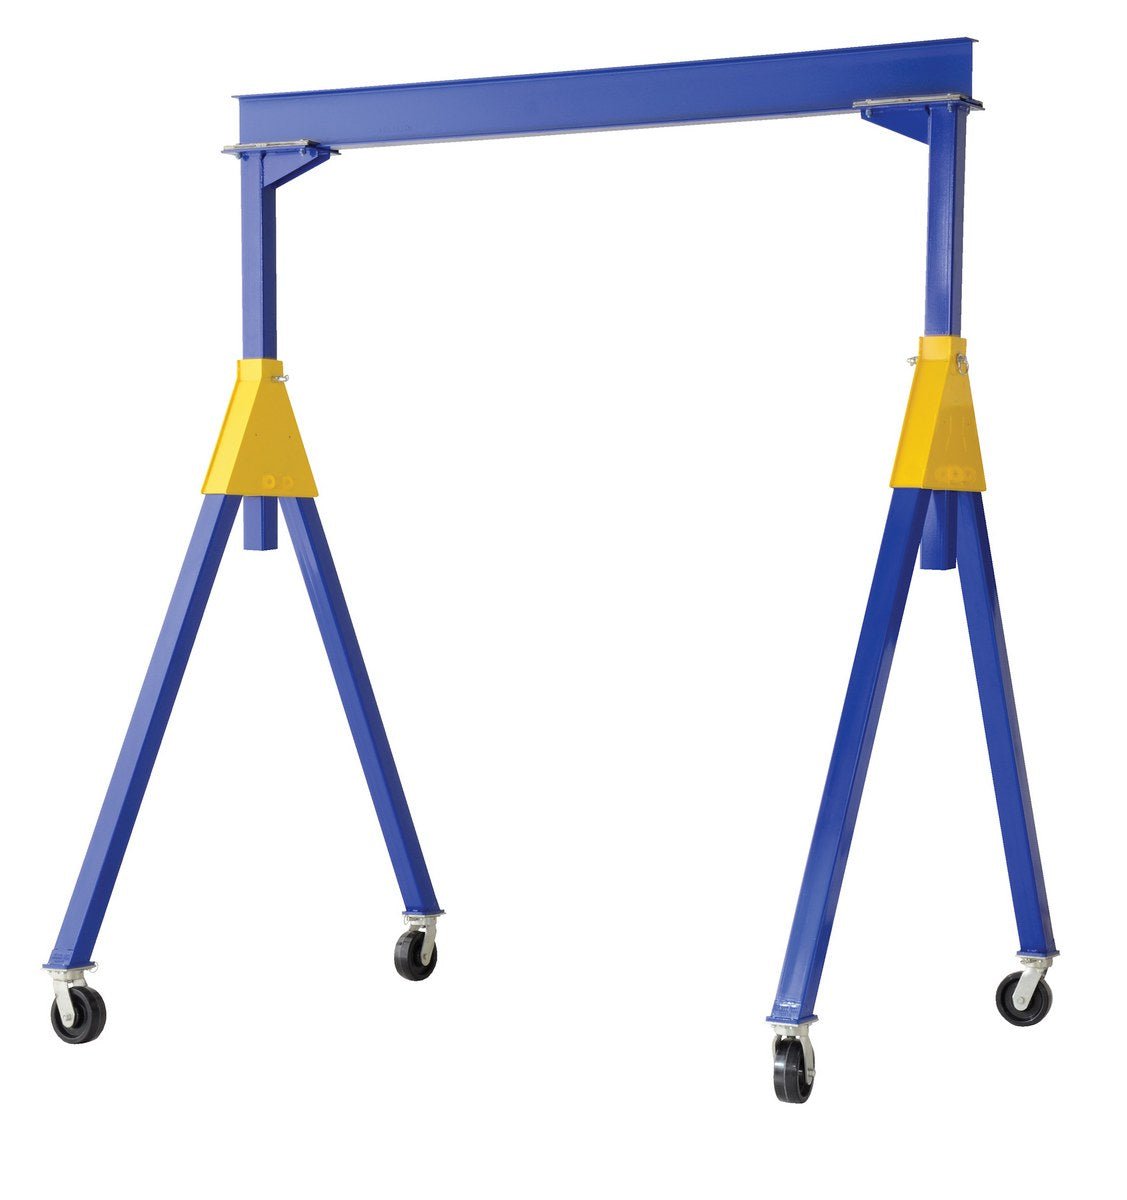 Fixed Height Steel Gantry Cranes - Vestil